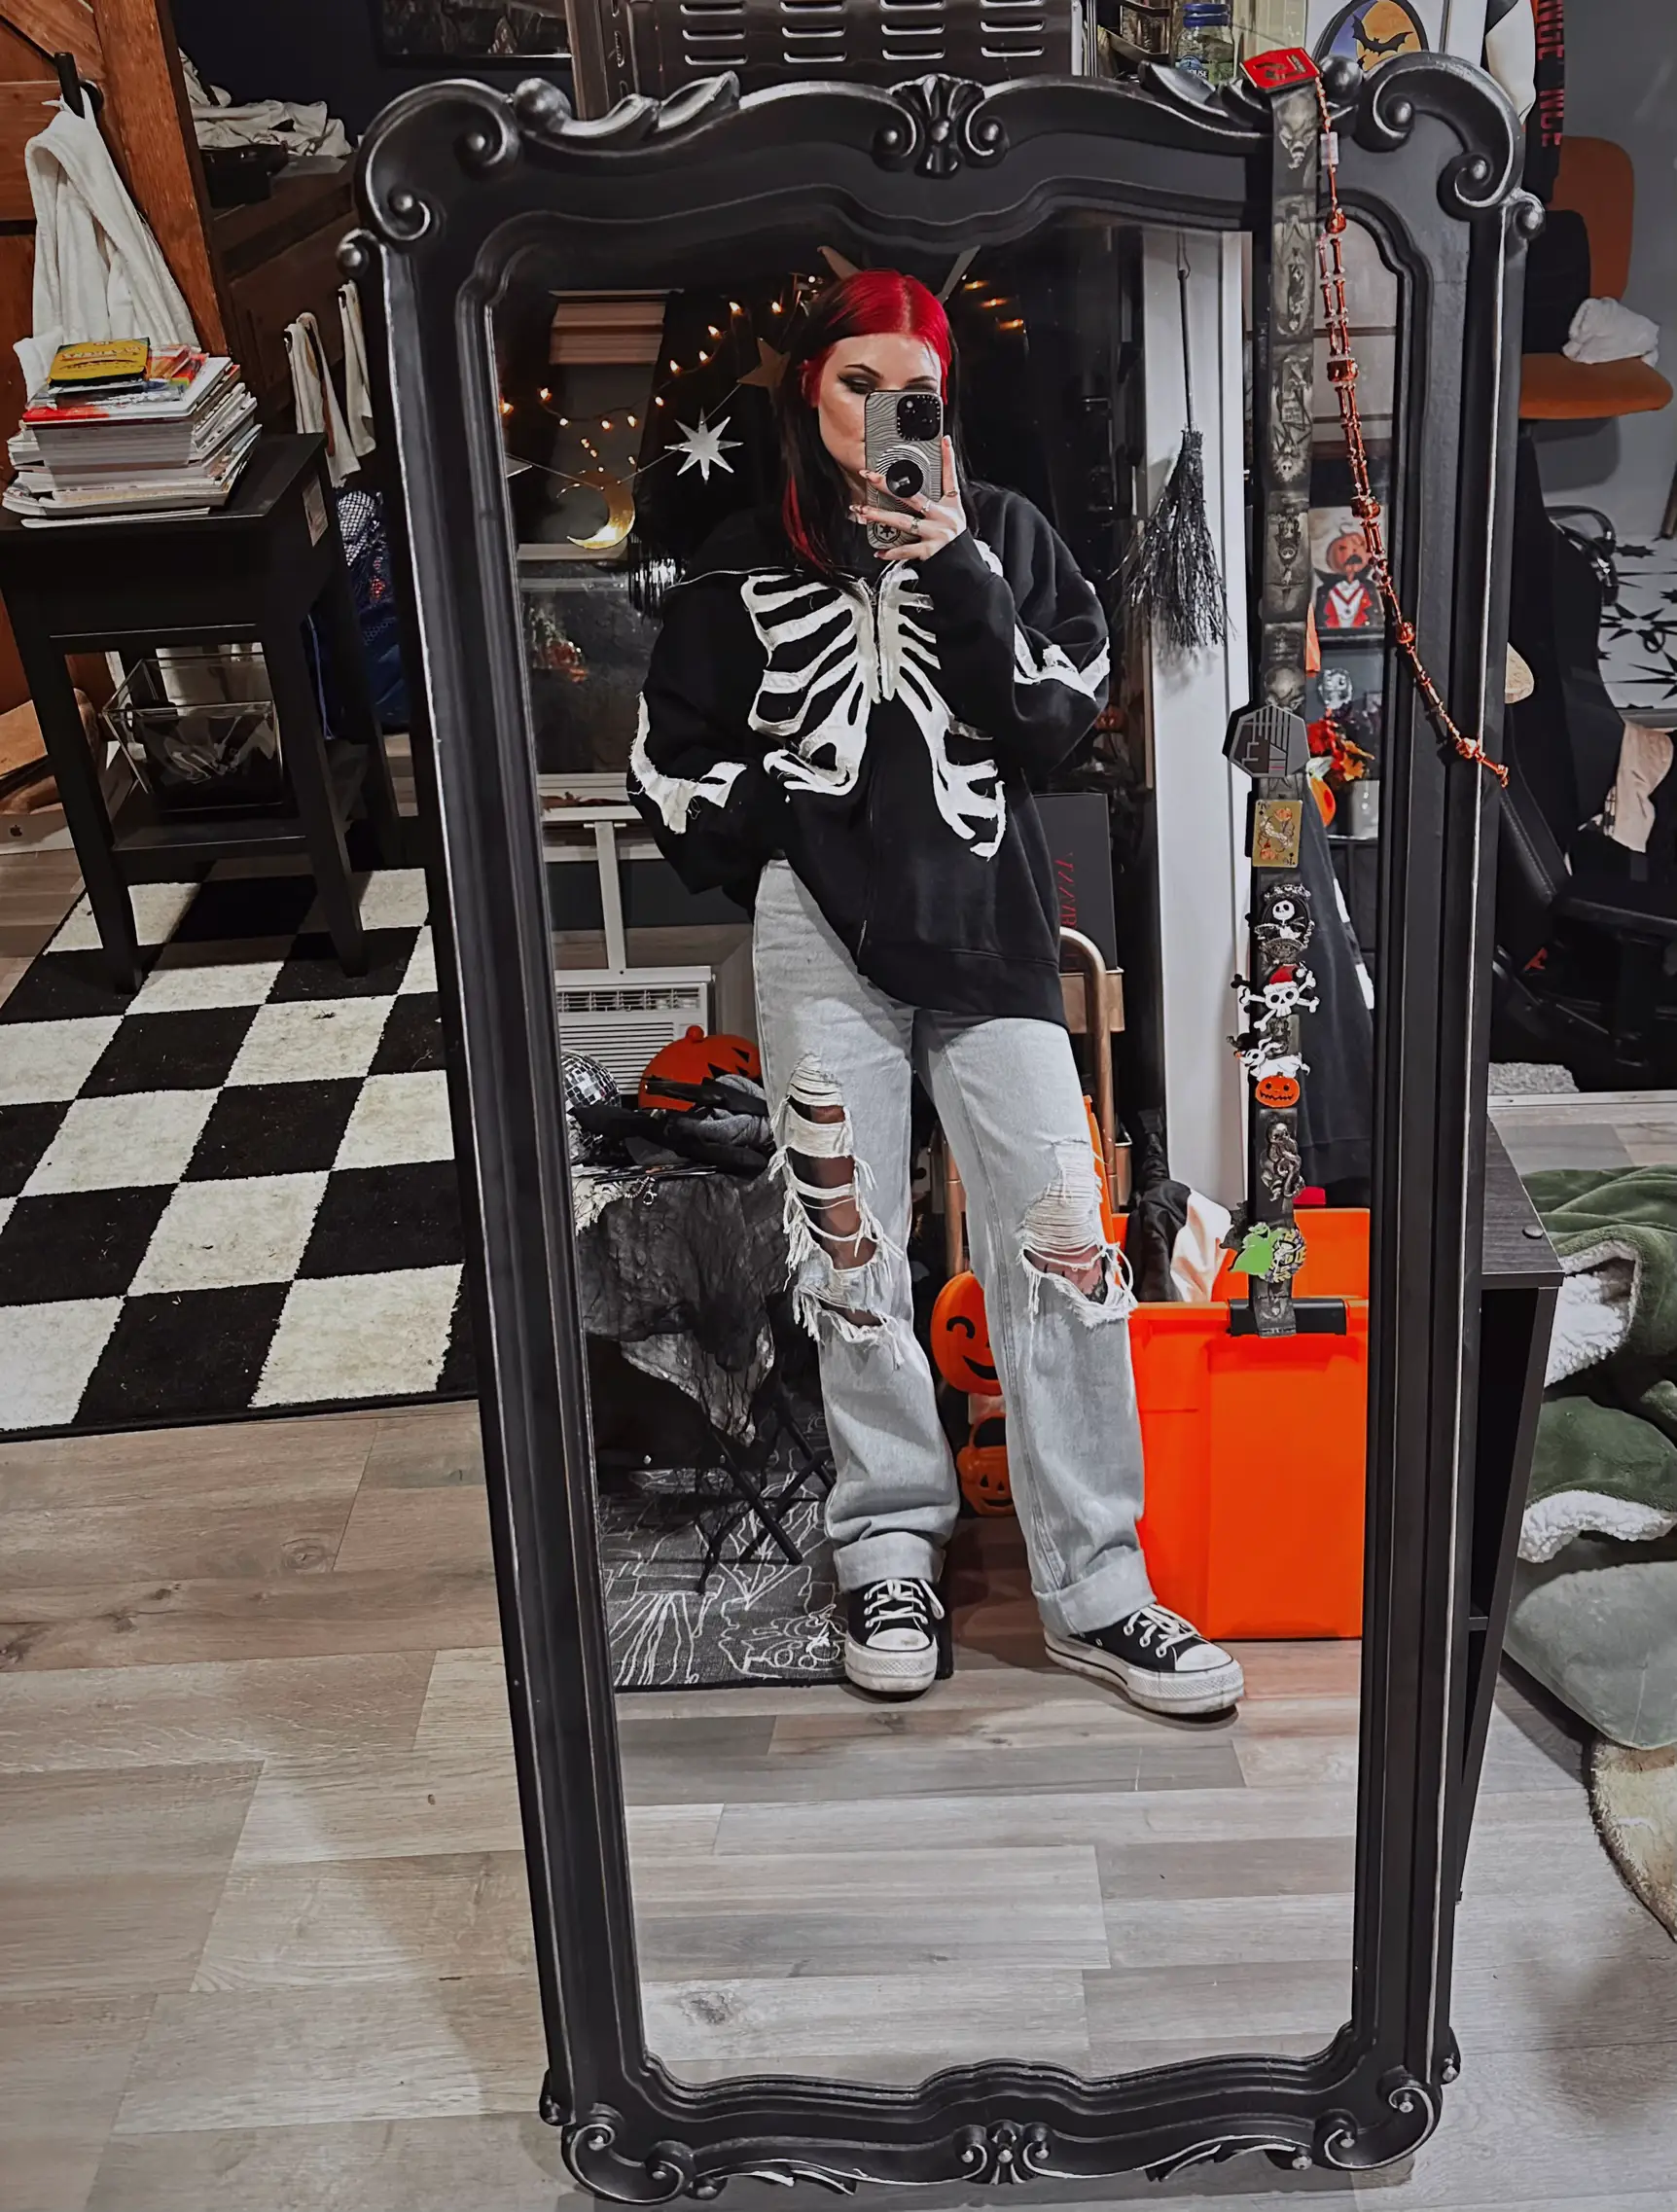 Shosho Skeleton Printed Legging/Pants Small Brand New Fall Halloween Bones